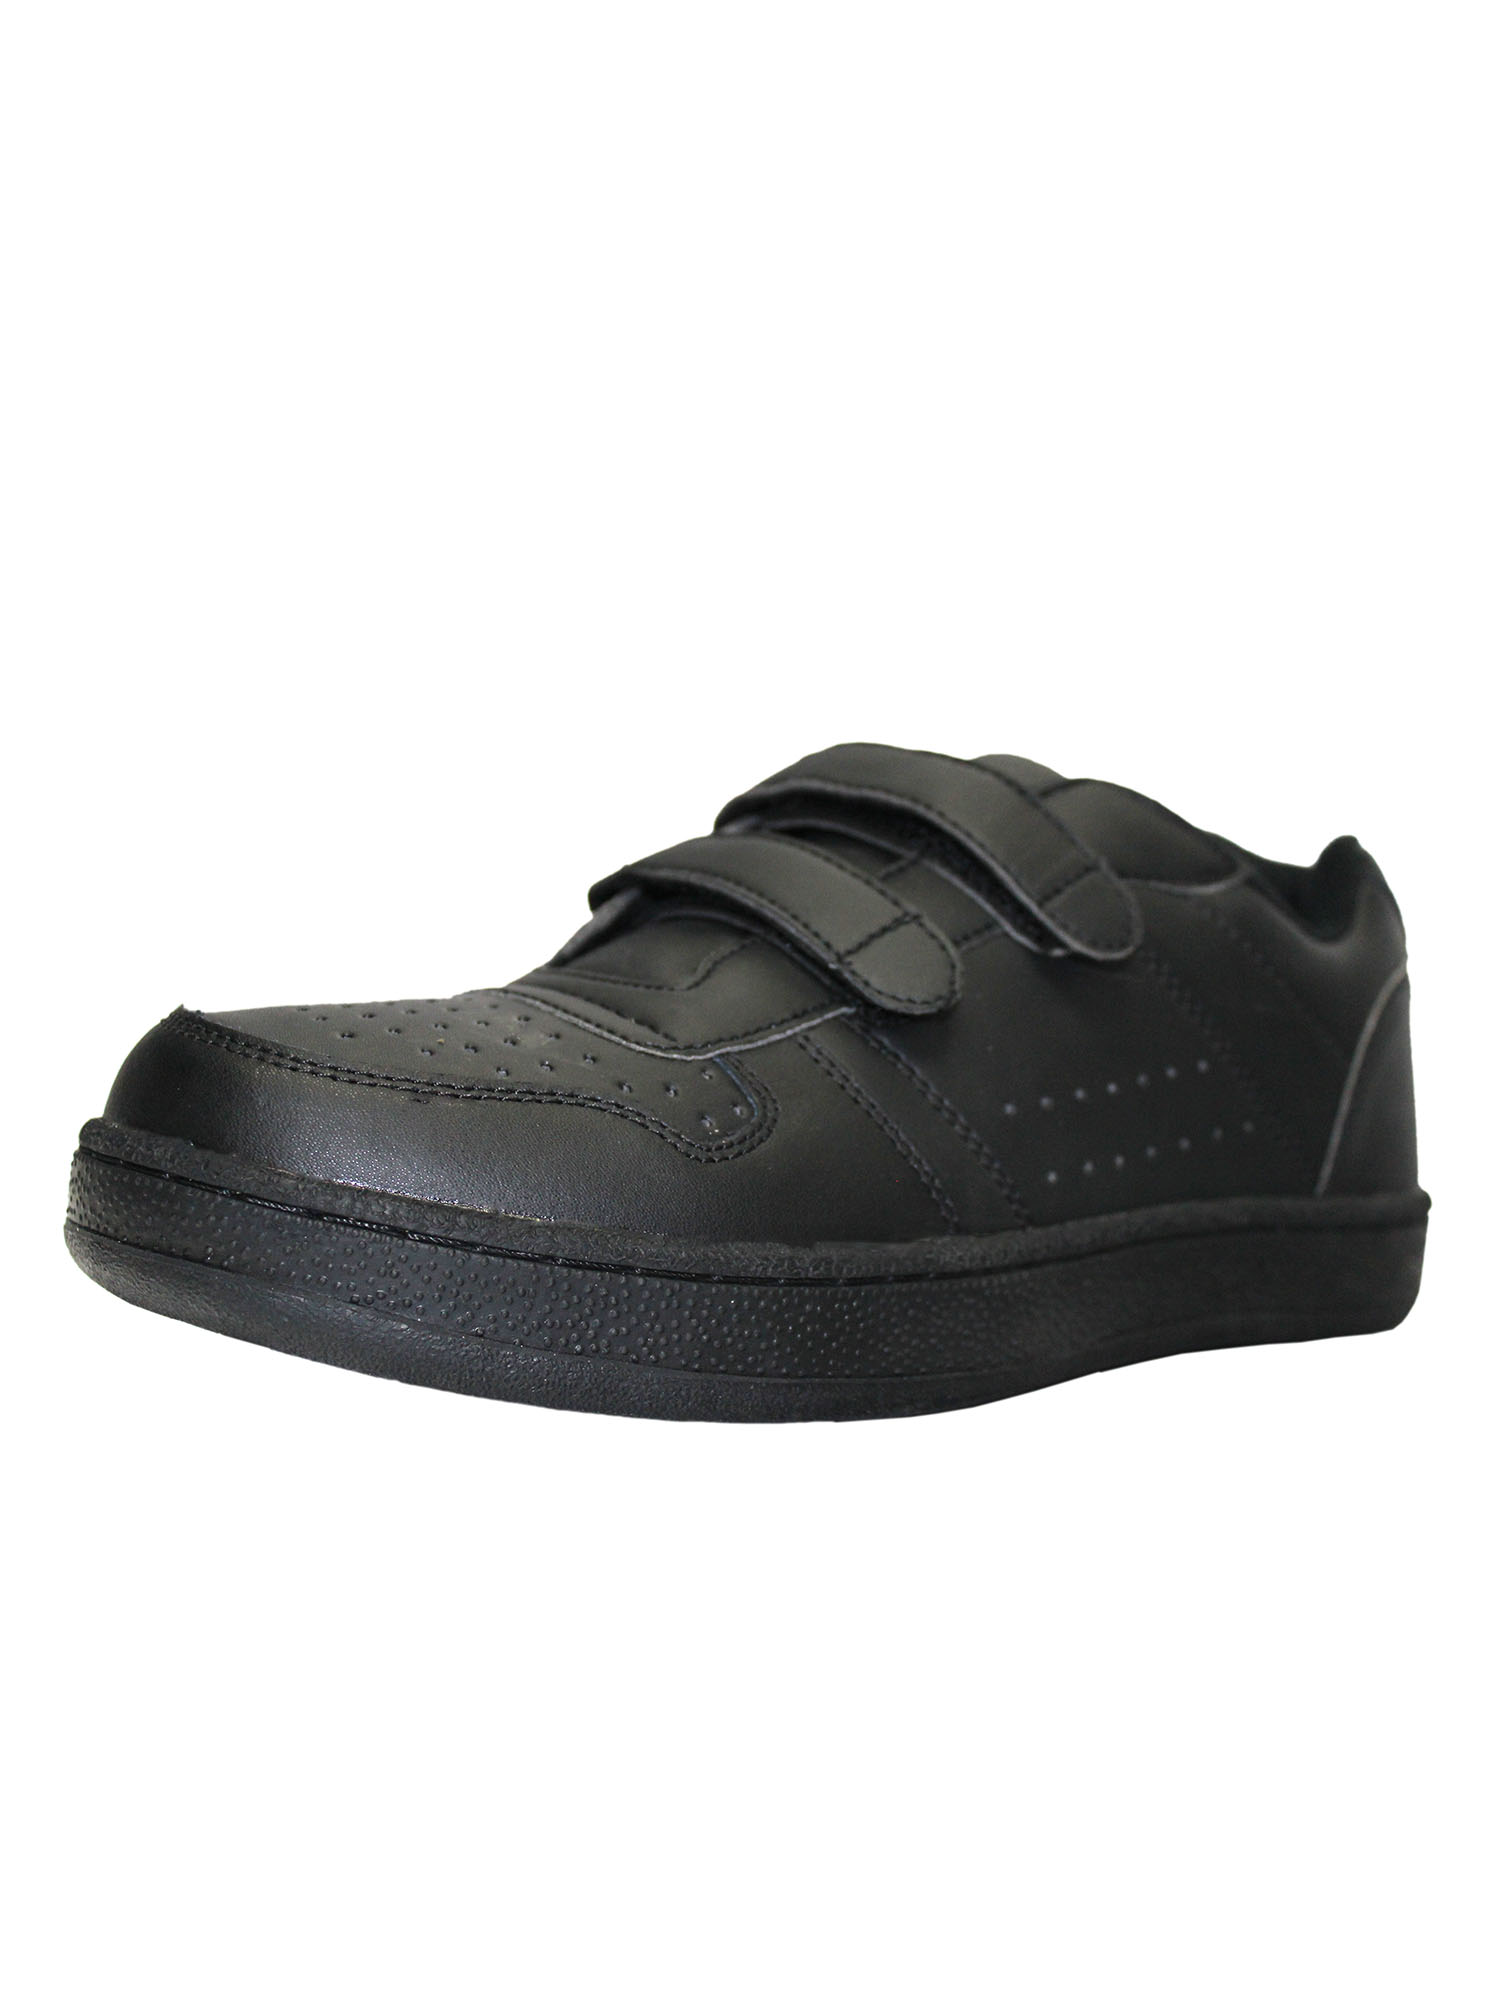 Tanleewa Men's Leather Strap Sneakers Lightweight Hook and Loop Walking Shoe Size 11 Adult Male - image 1 of 4